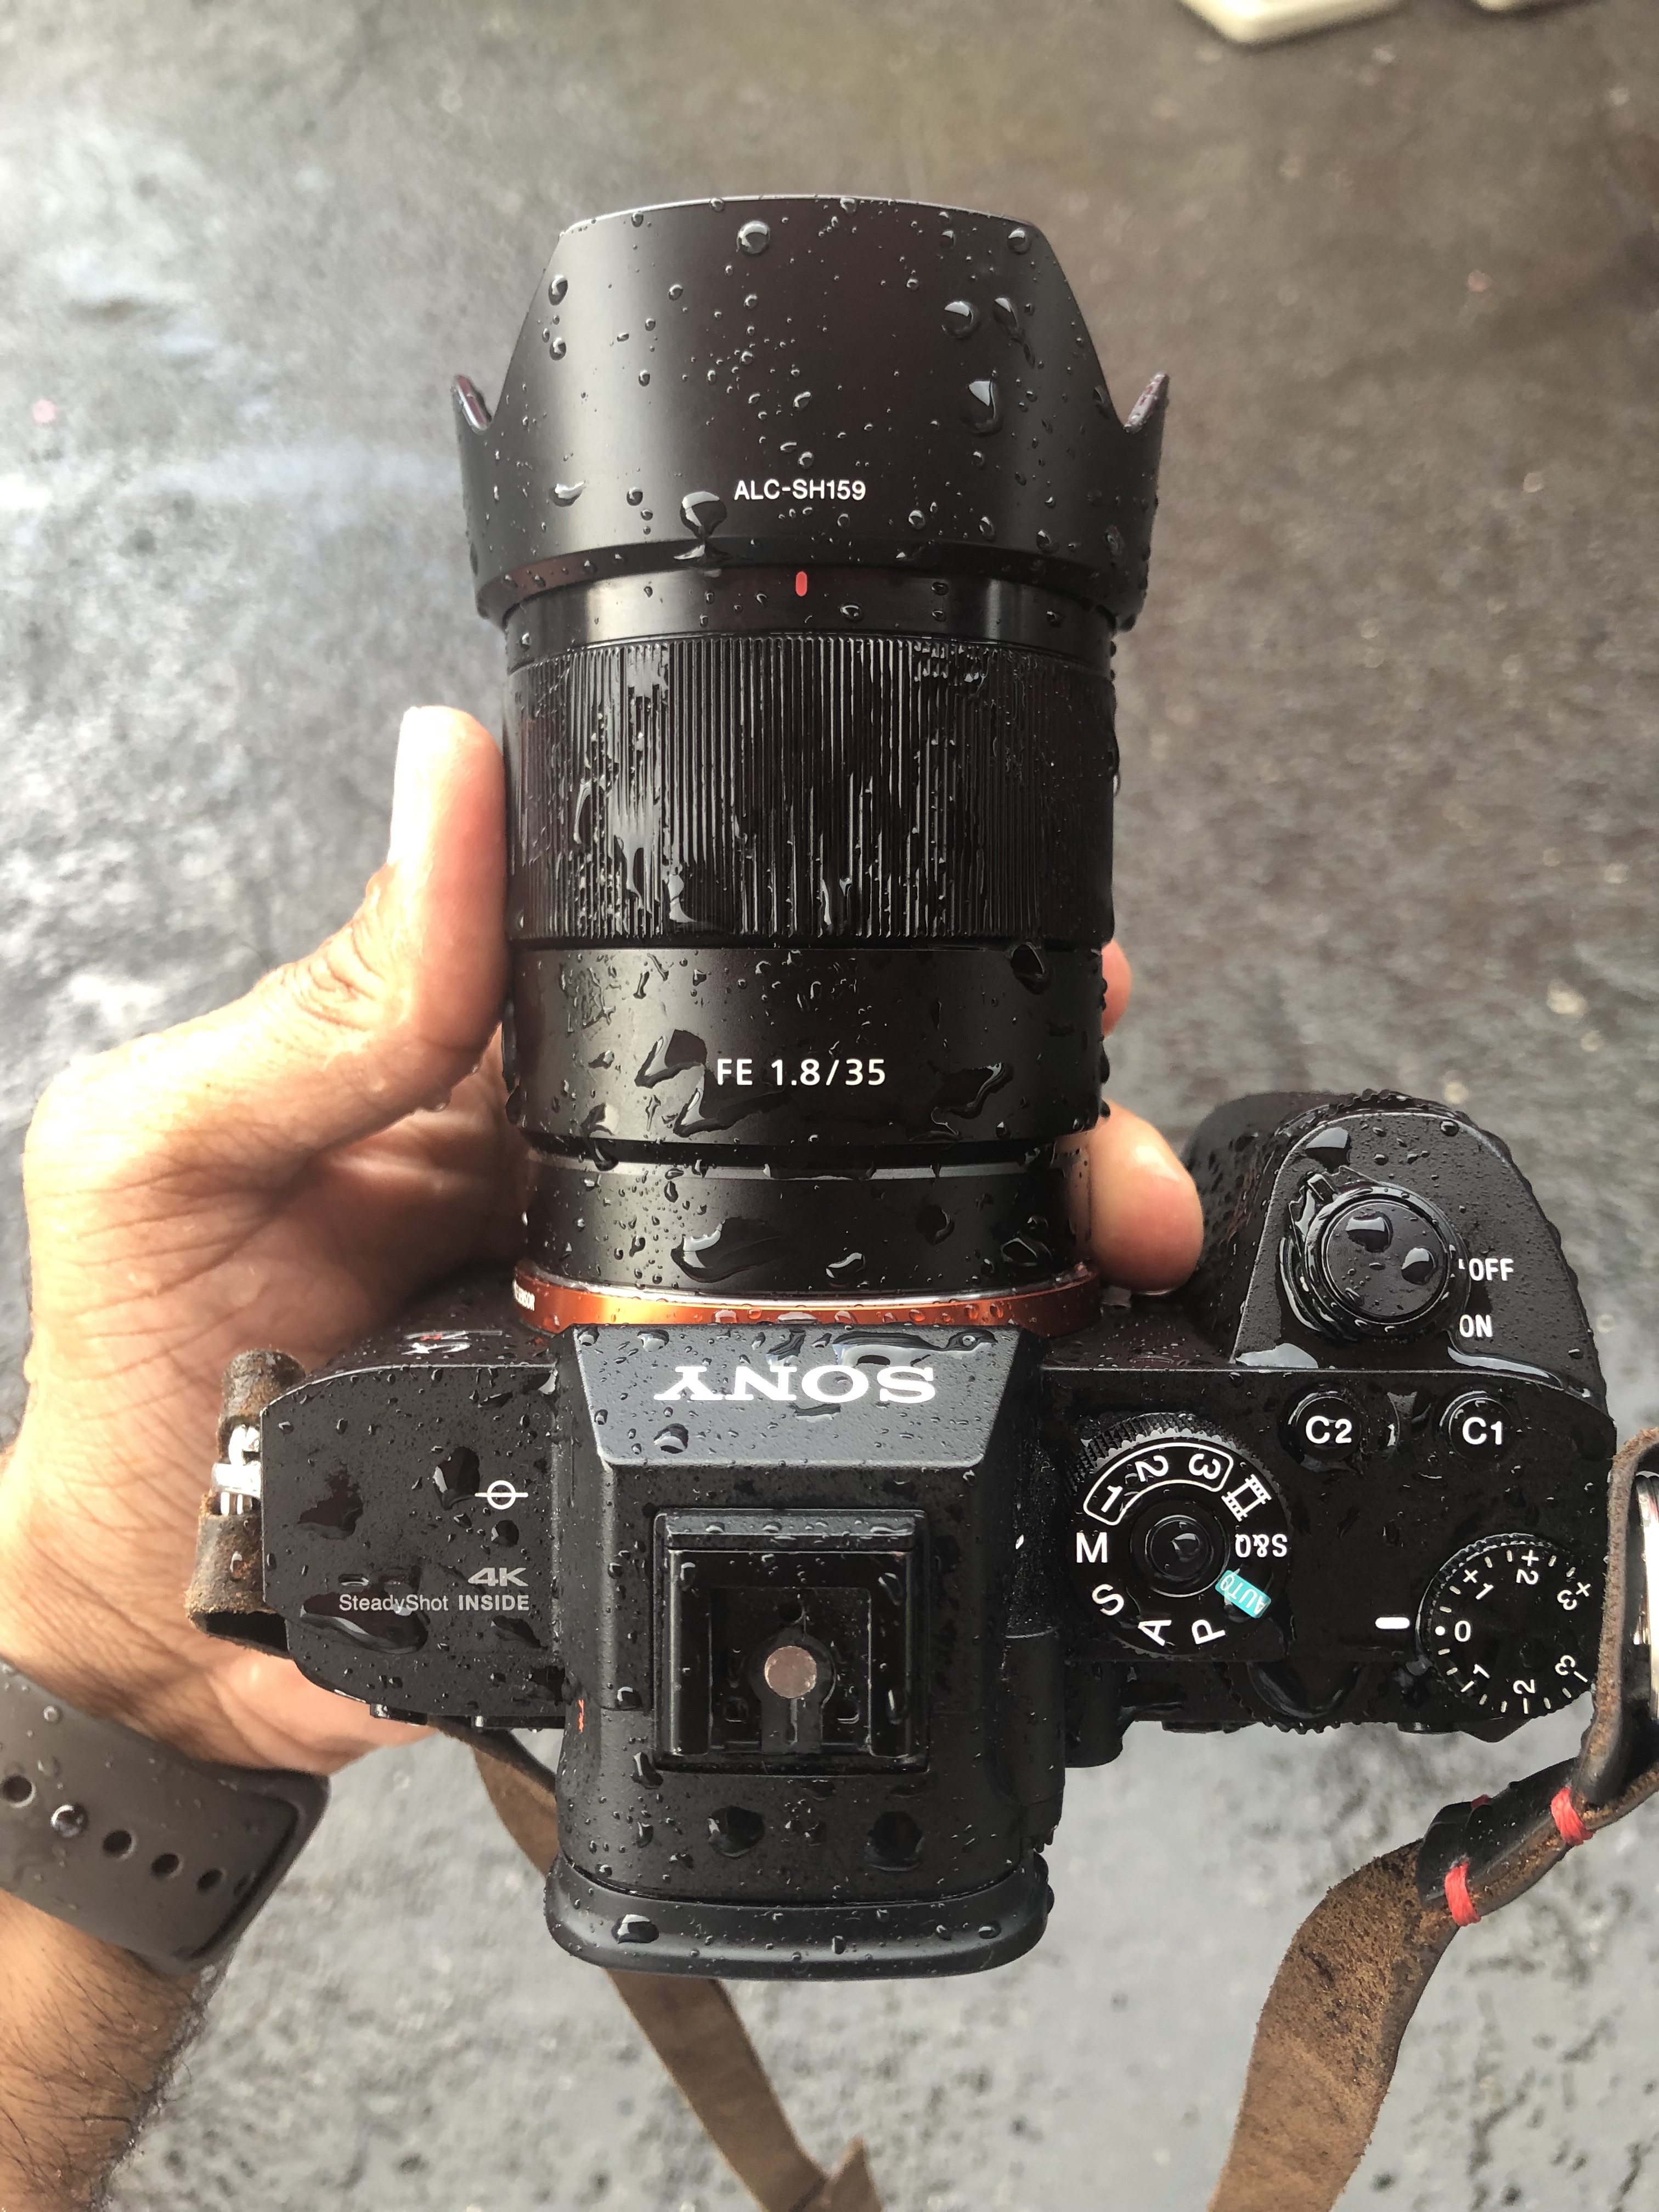 aankomst Voorbeeld instinct Review: Sony 35mm f1.8 FE (This is My Next Lens)